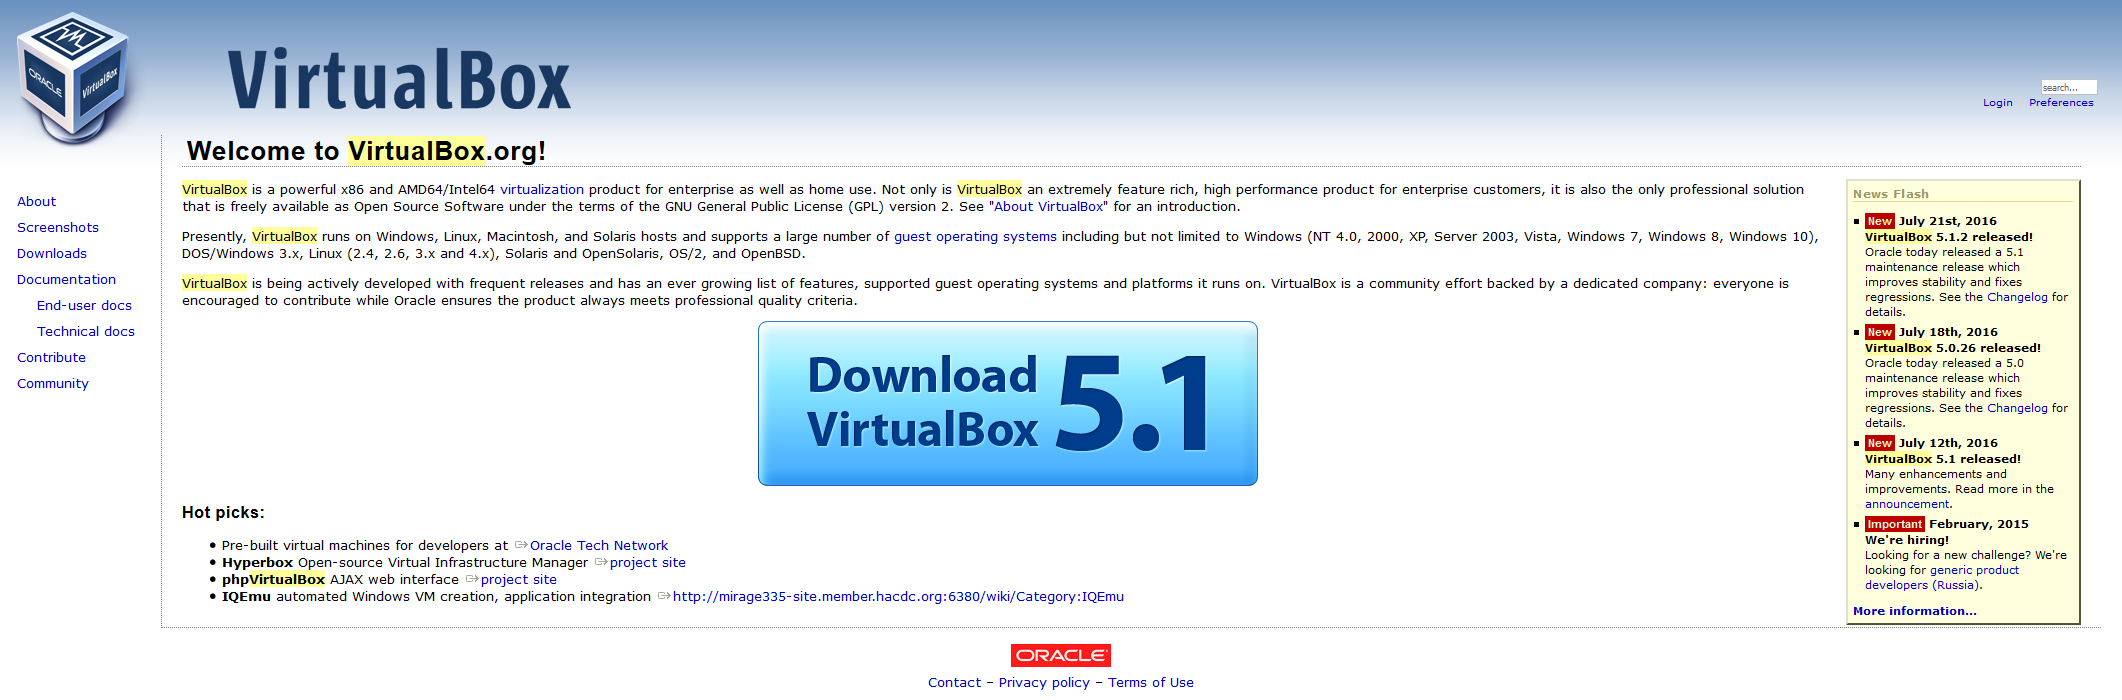 virtualbox-hp